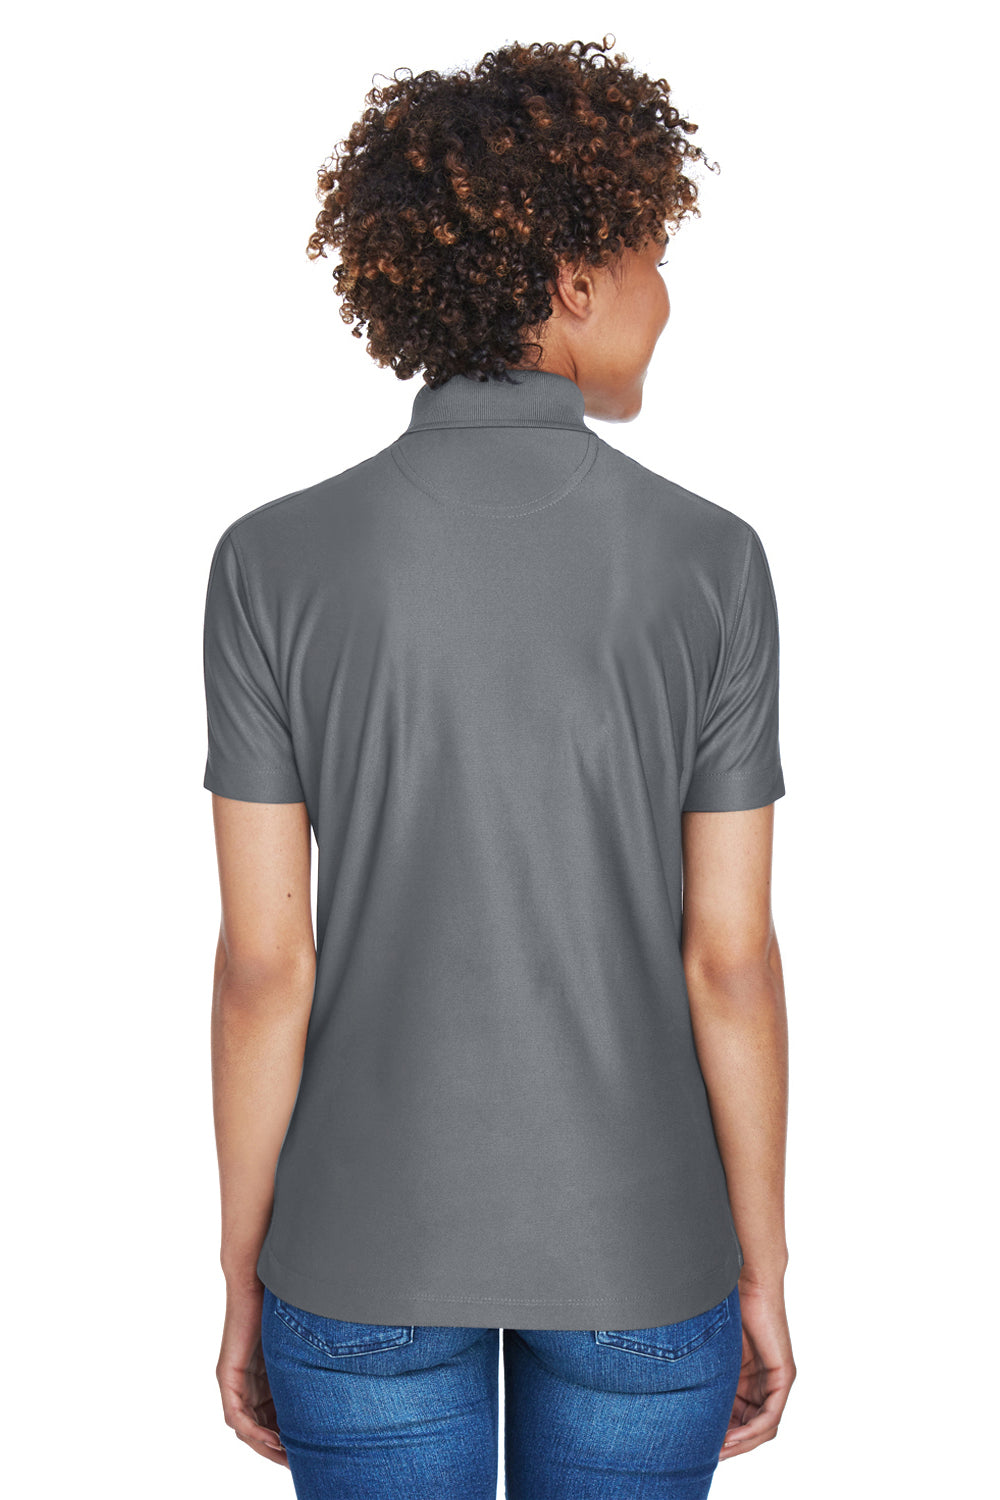 UltraClub 8414 Womens Cool & Dry Elite Performance Moisture Wicking Short Sleeve Polo Shirt Charcoal Grey Back